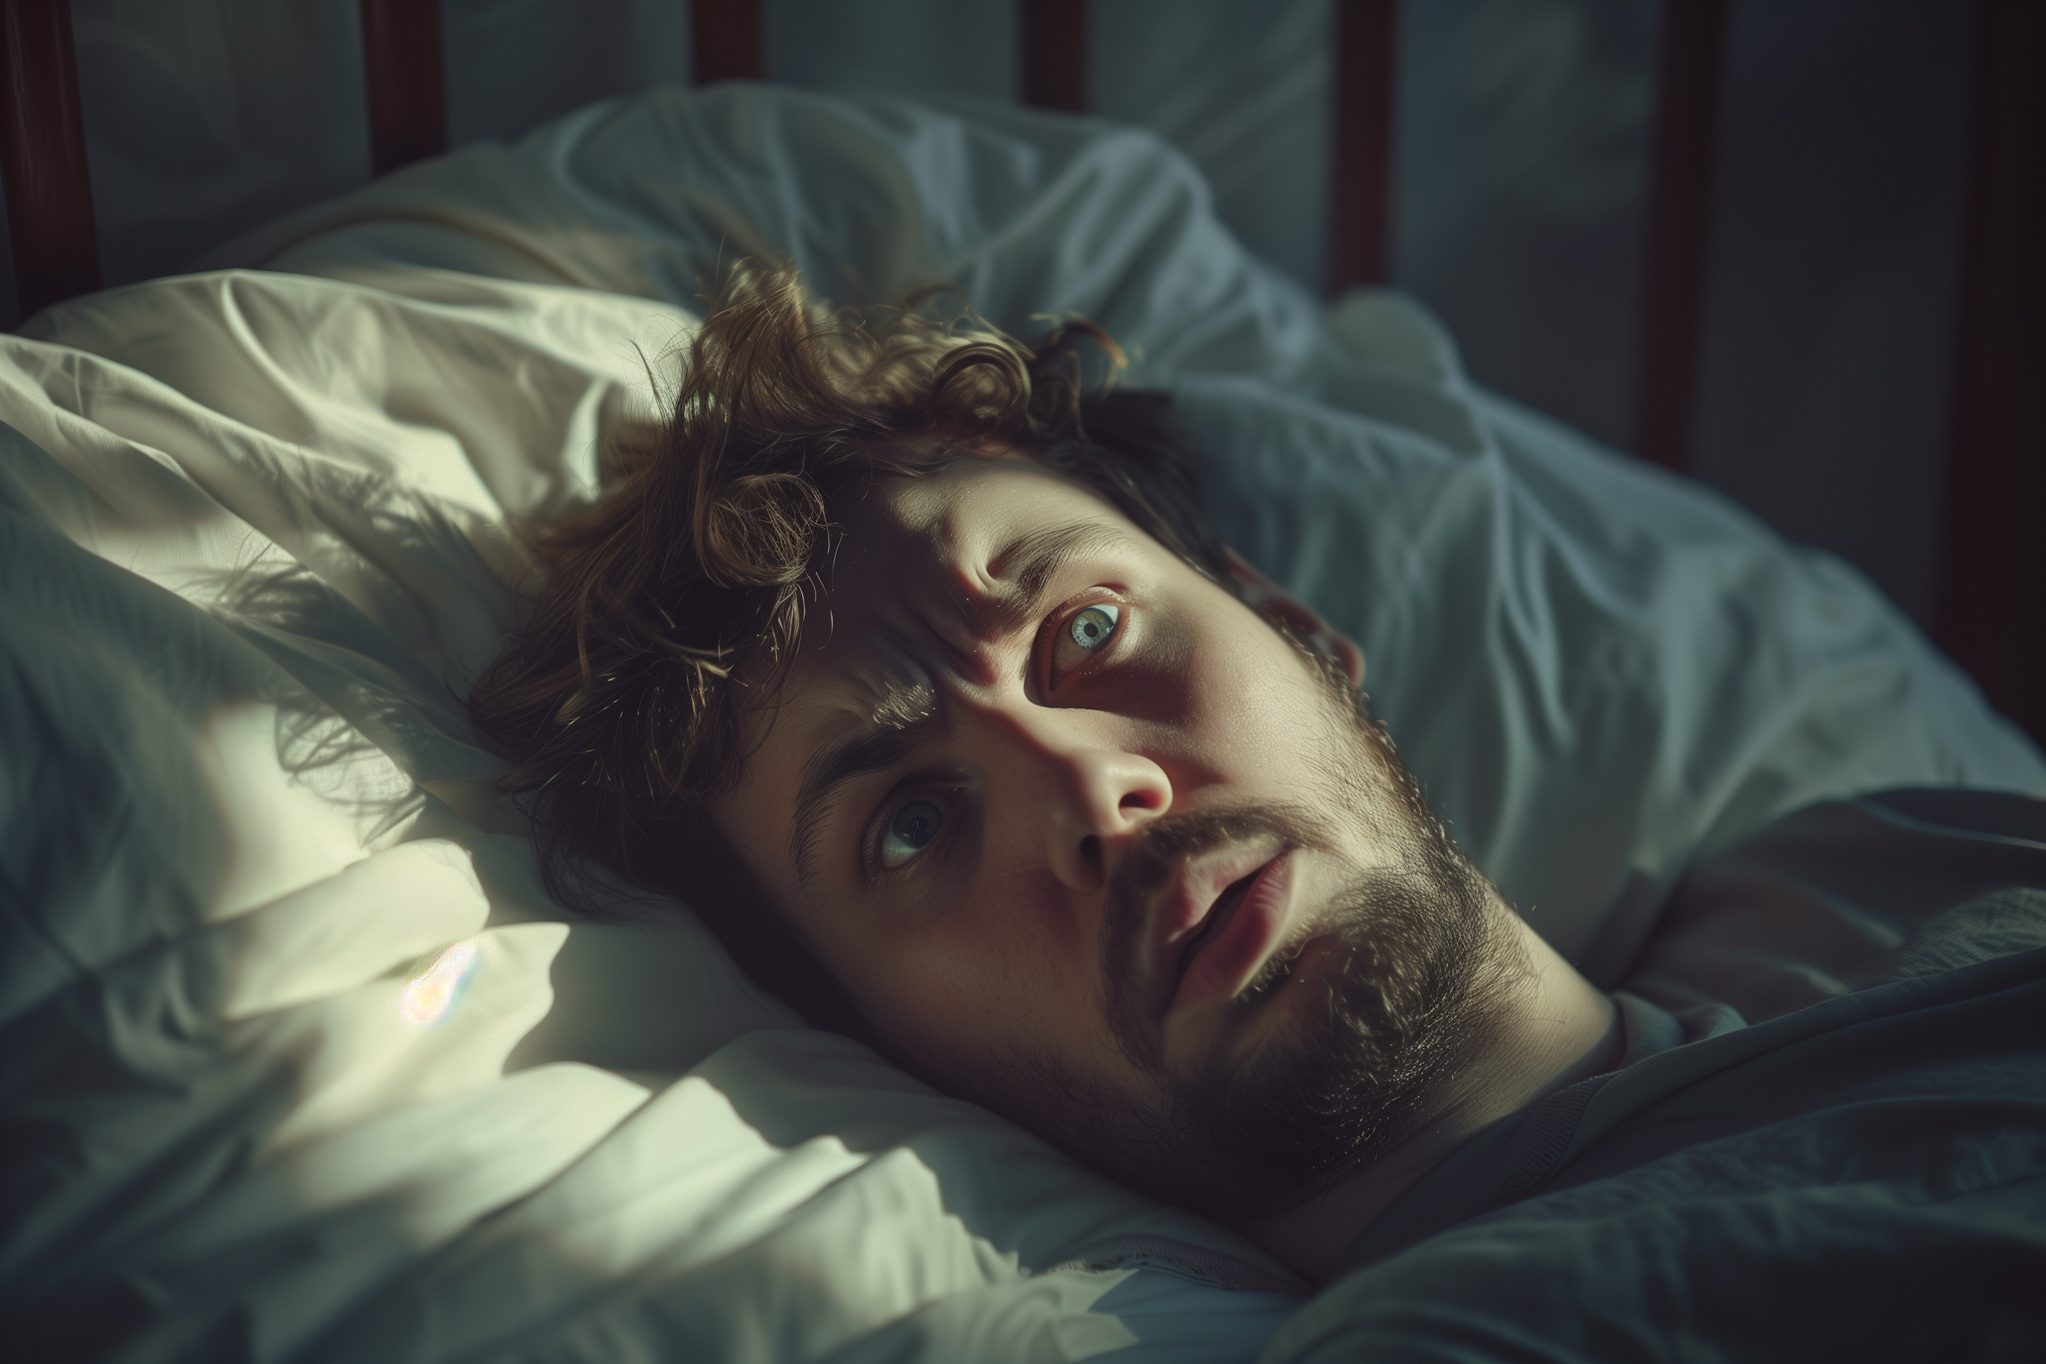 Adult Night Terrors: A Closer Look at This Disturbing Sleep Disorder